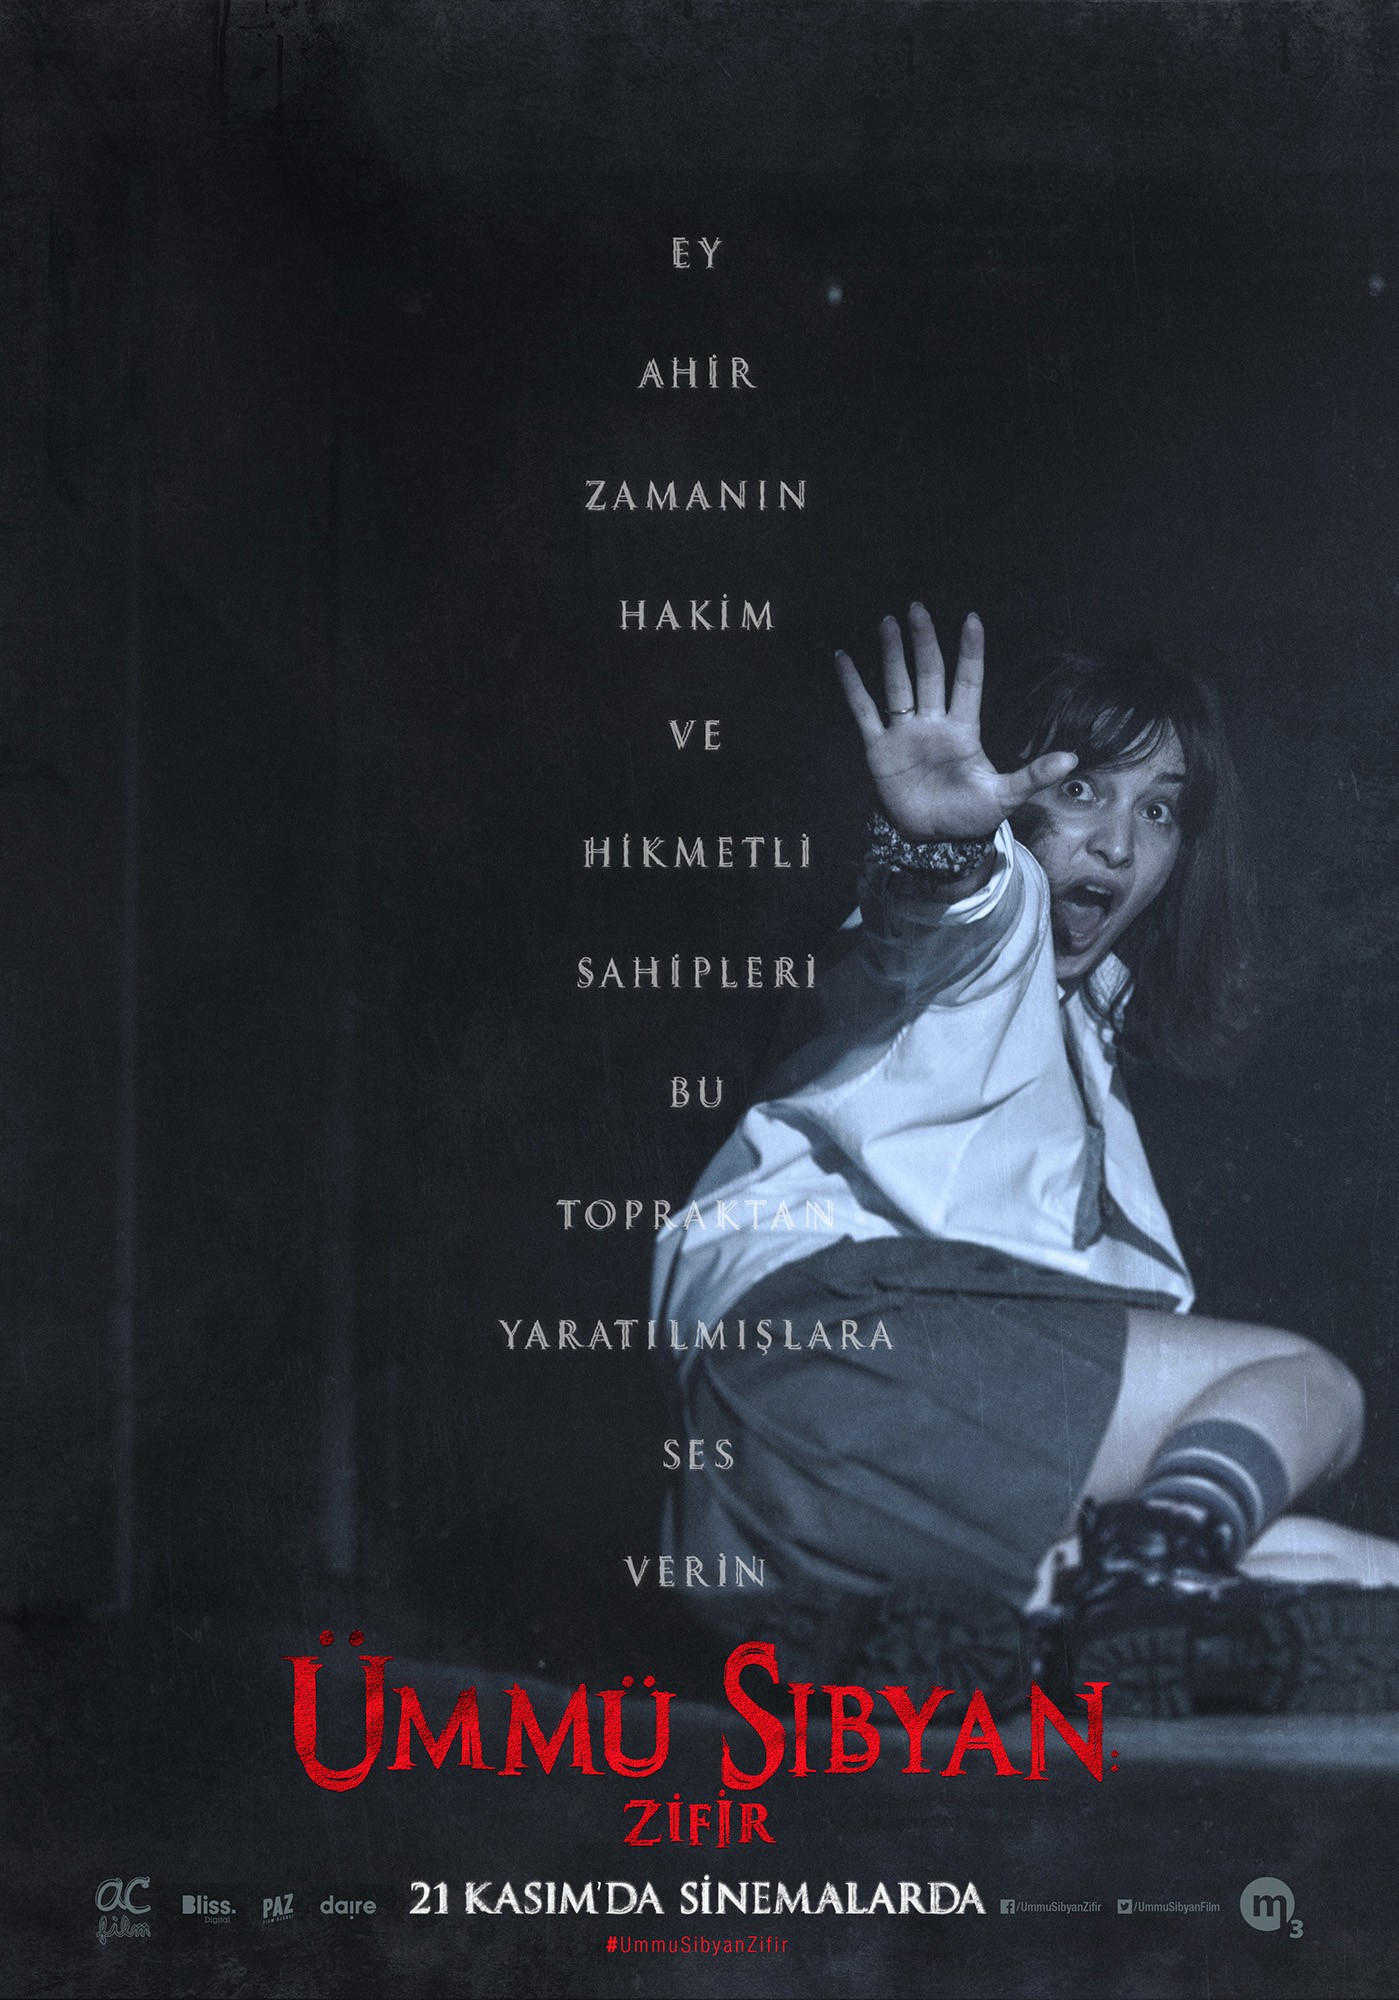 Mega Sized Movie Poster Image for Ümmü Sıbyan Zifir (#12 of 12)